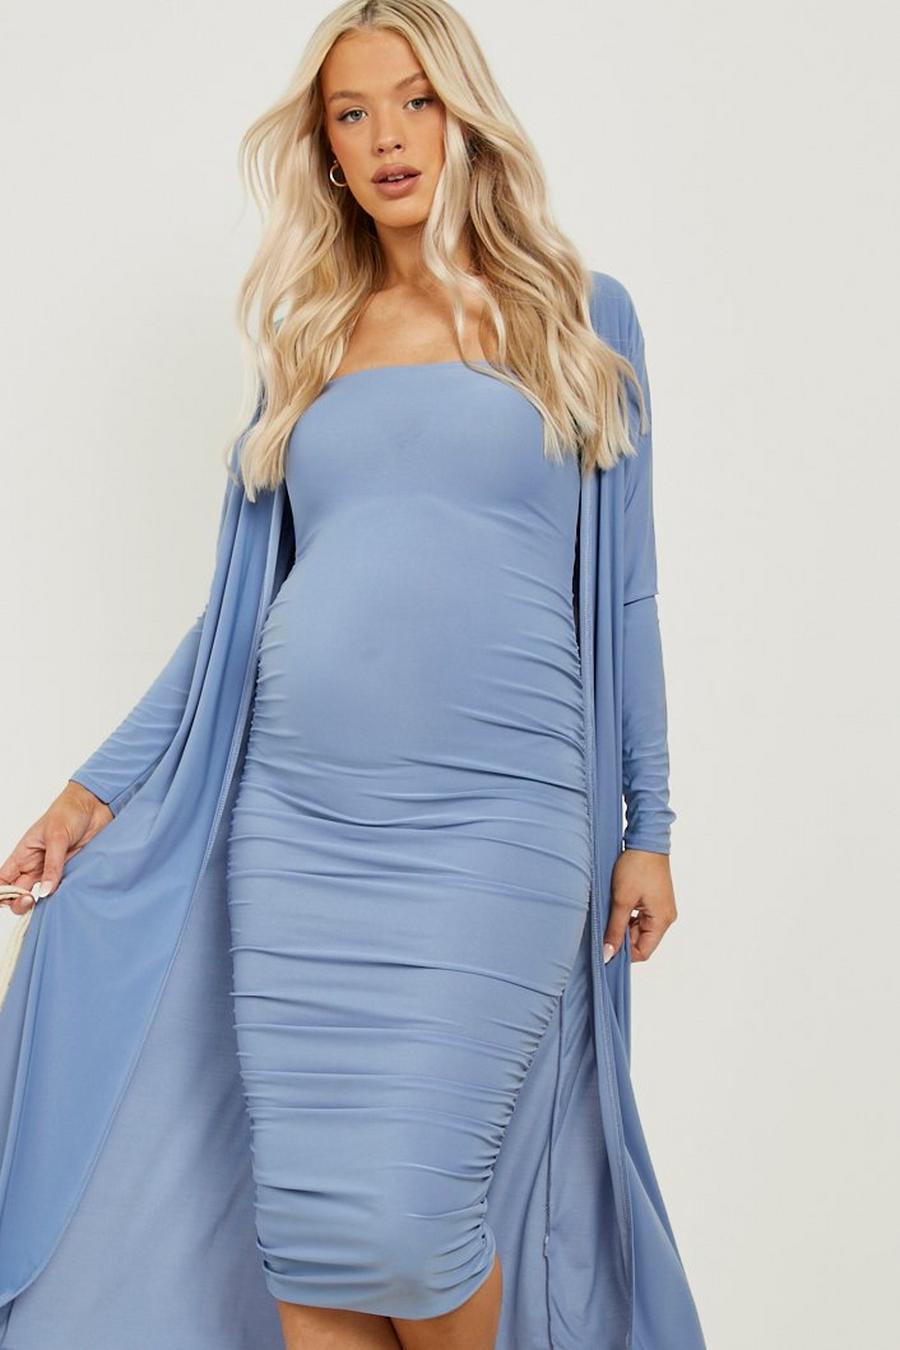 Baby blue סט של מעיל רכיבה ושמלה עם מחשוף מרובע וכיווצים, להיריון